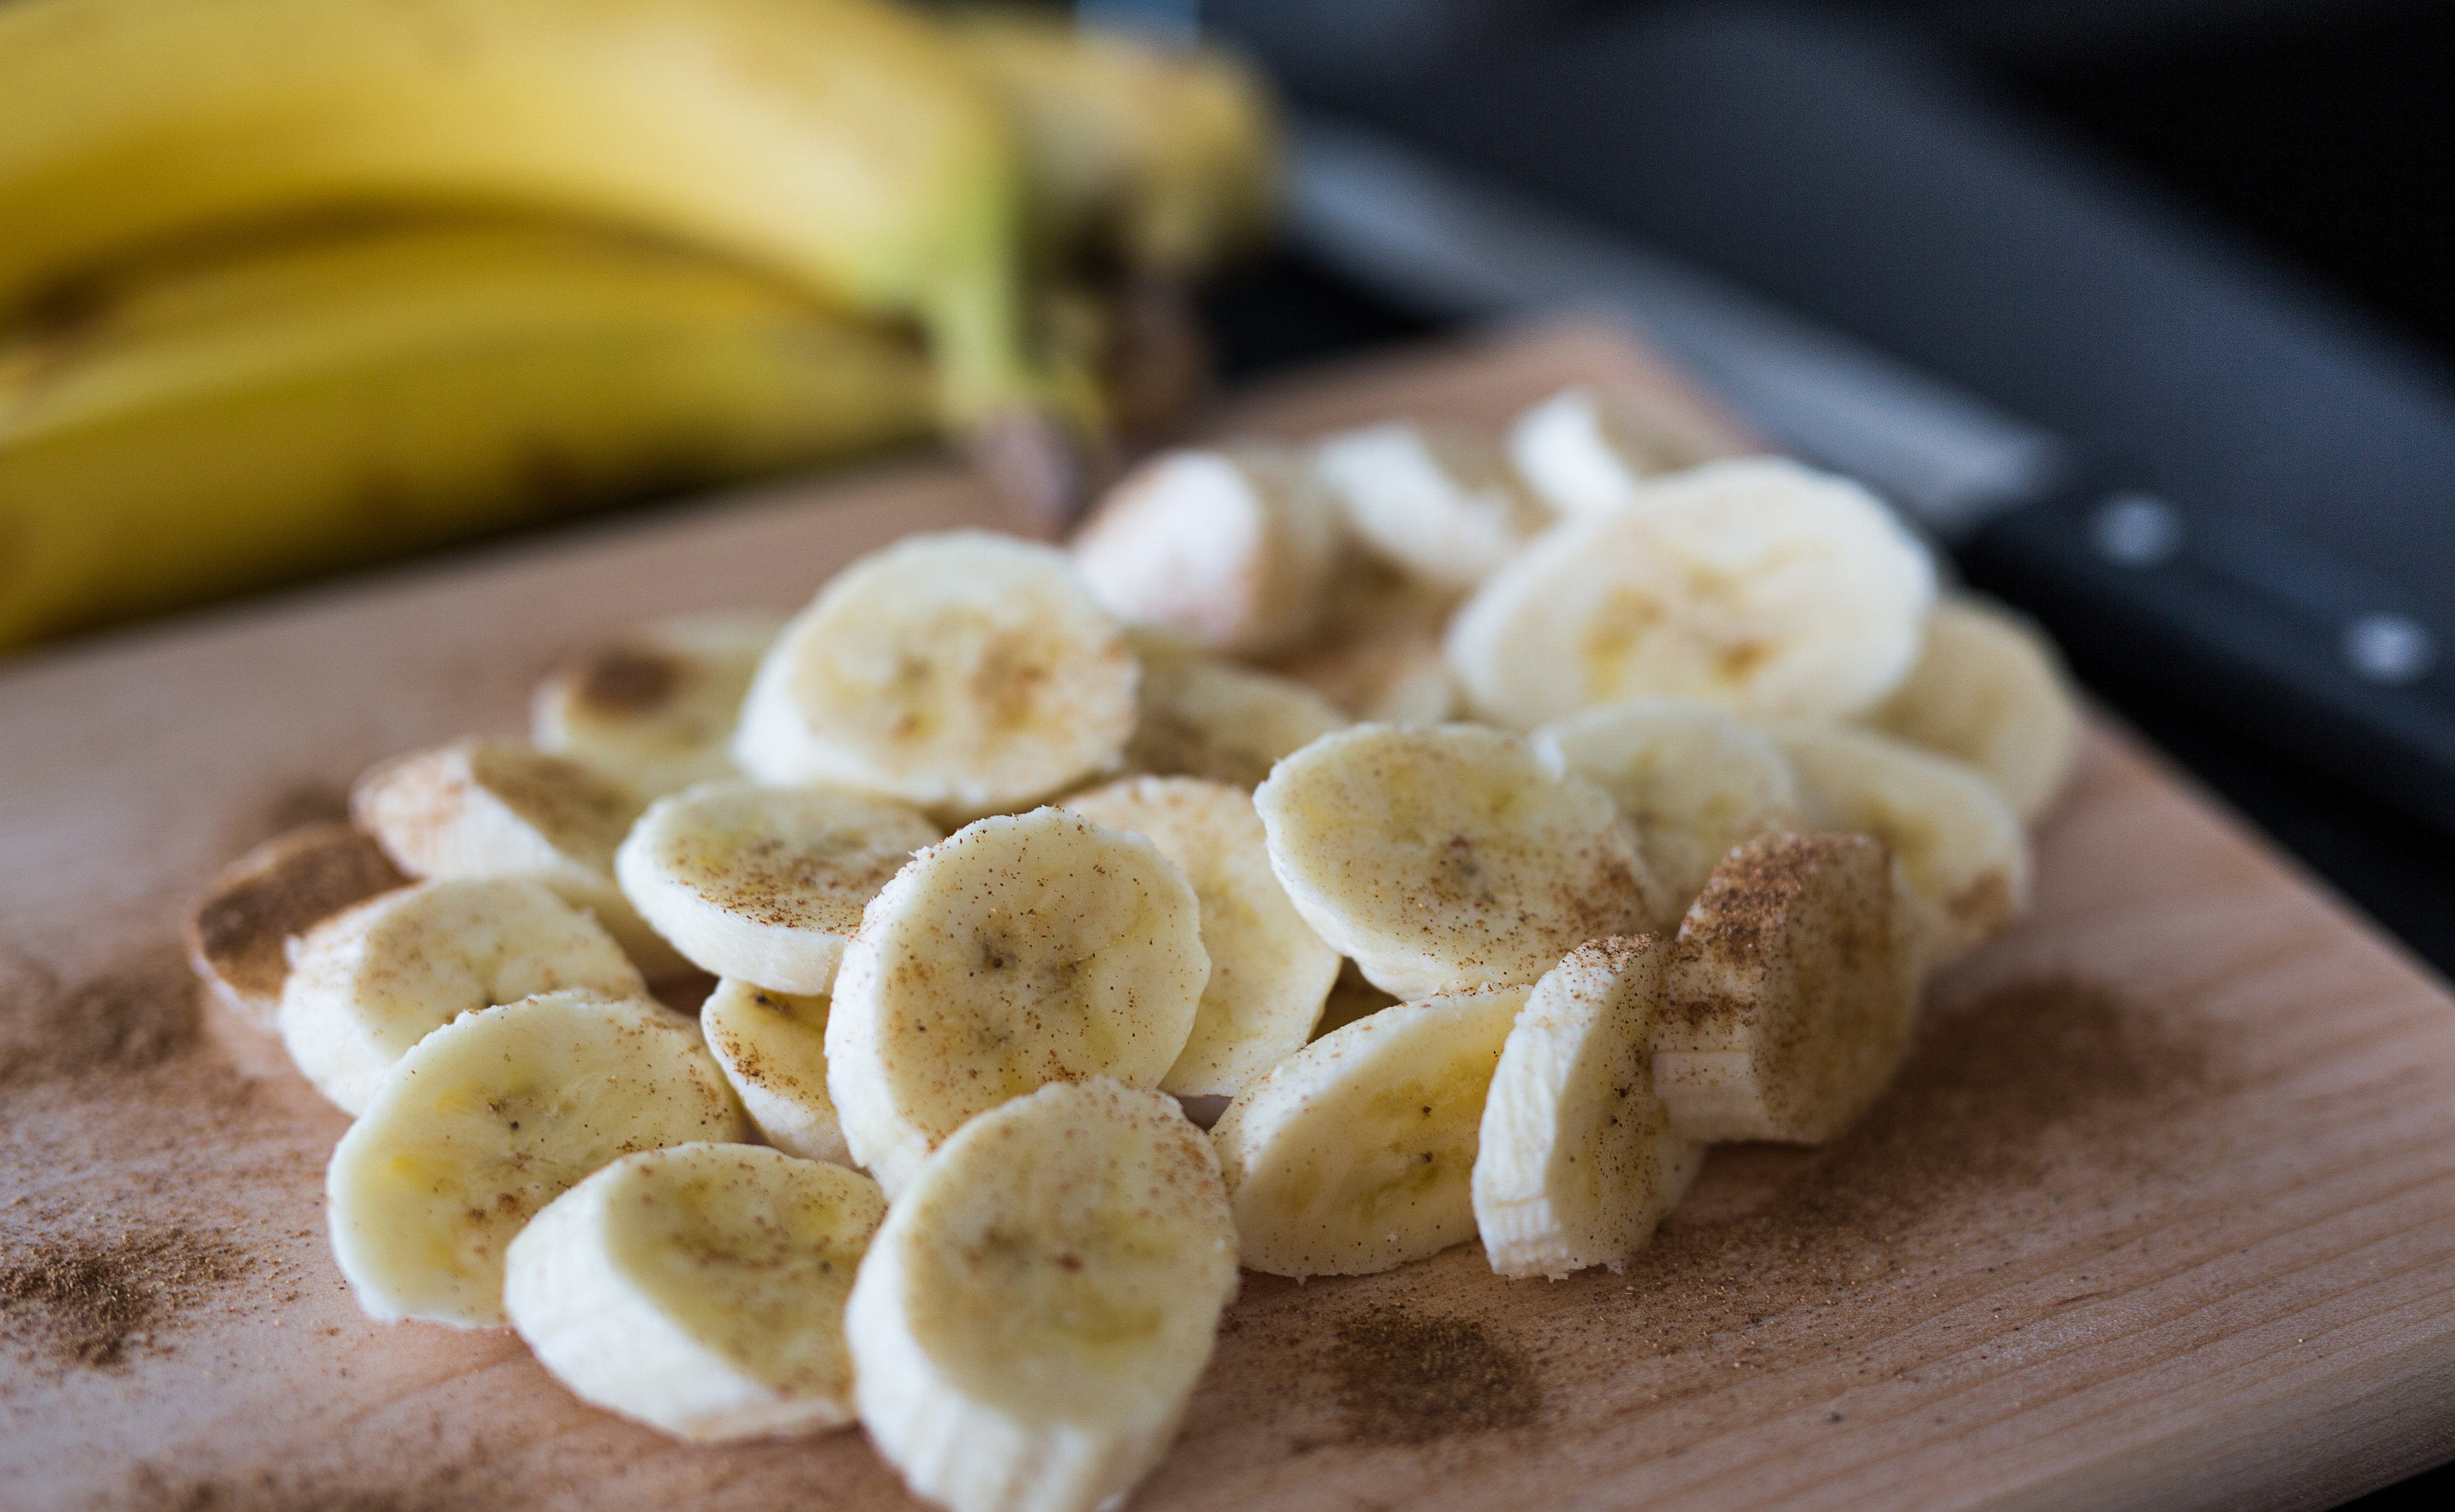 Banana - Ripe (Bunch) – MK Local Foods